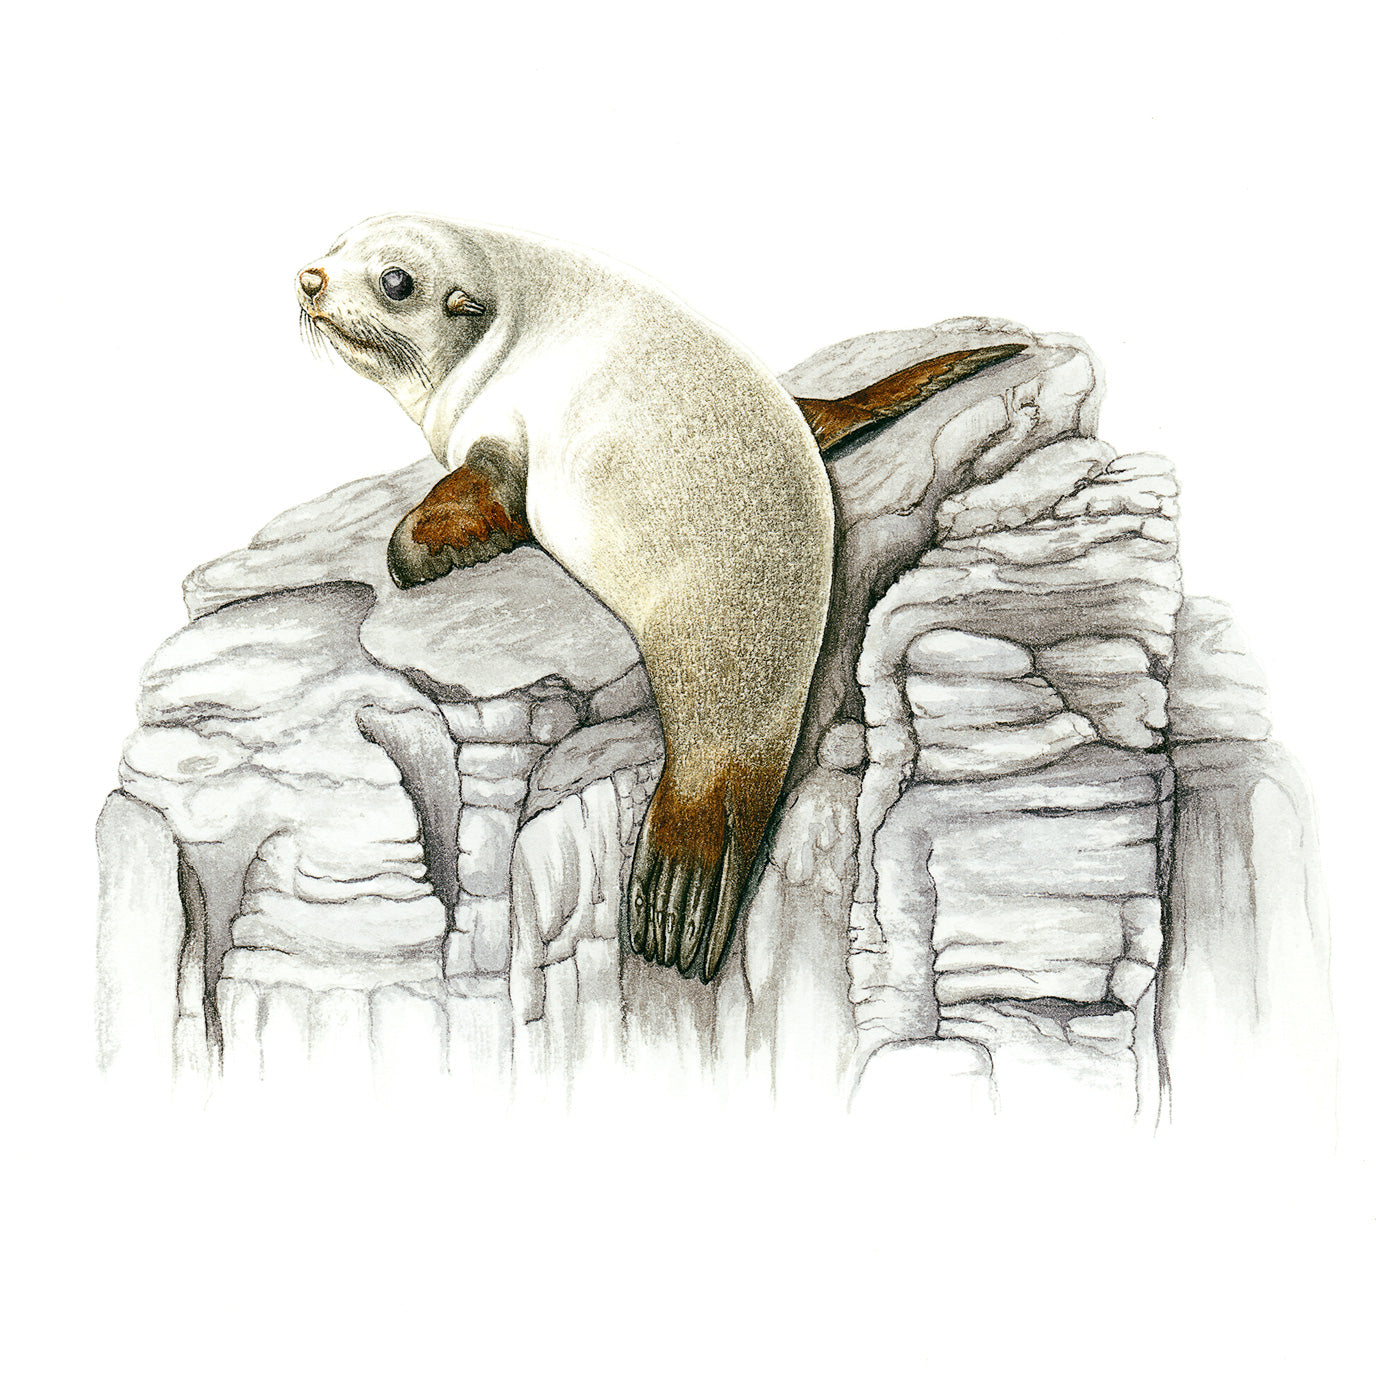 Sylvie Gerozisis - Marine Life of Tasmania - Art Print - Australian Fur Seal Pup